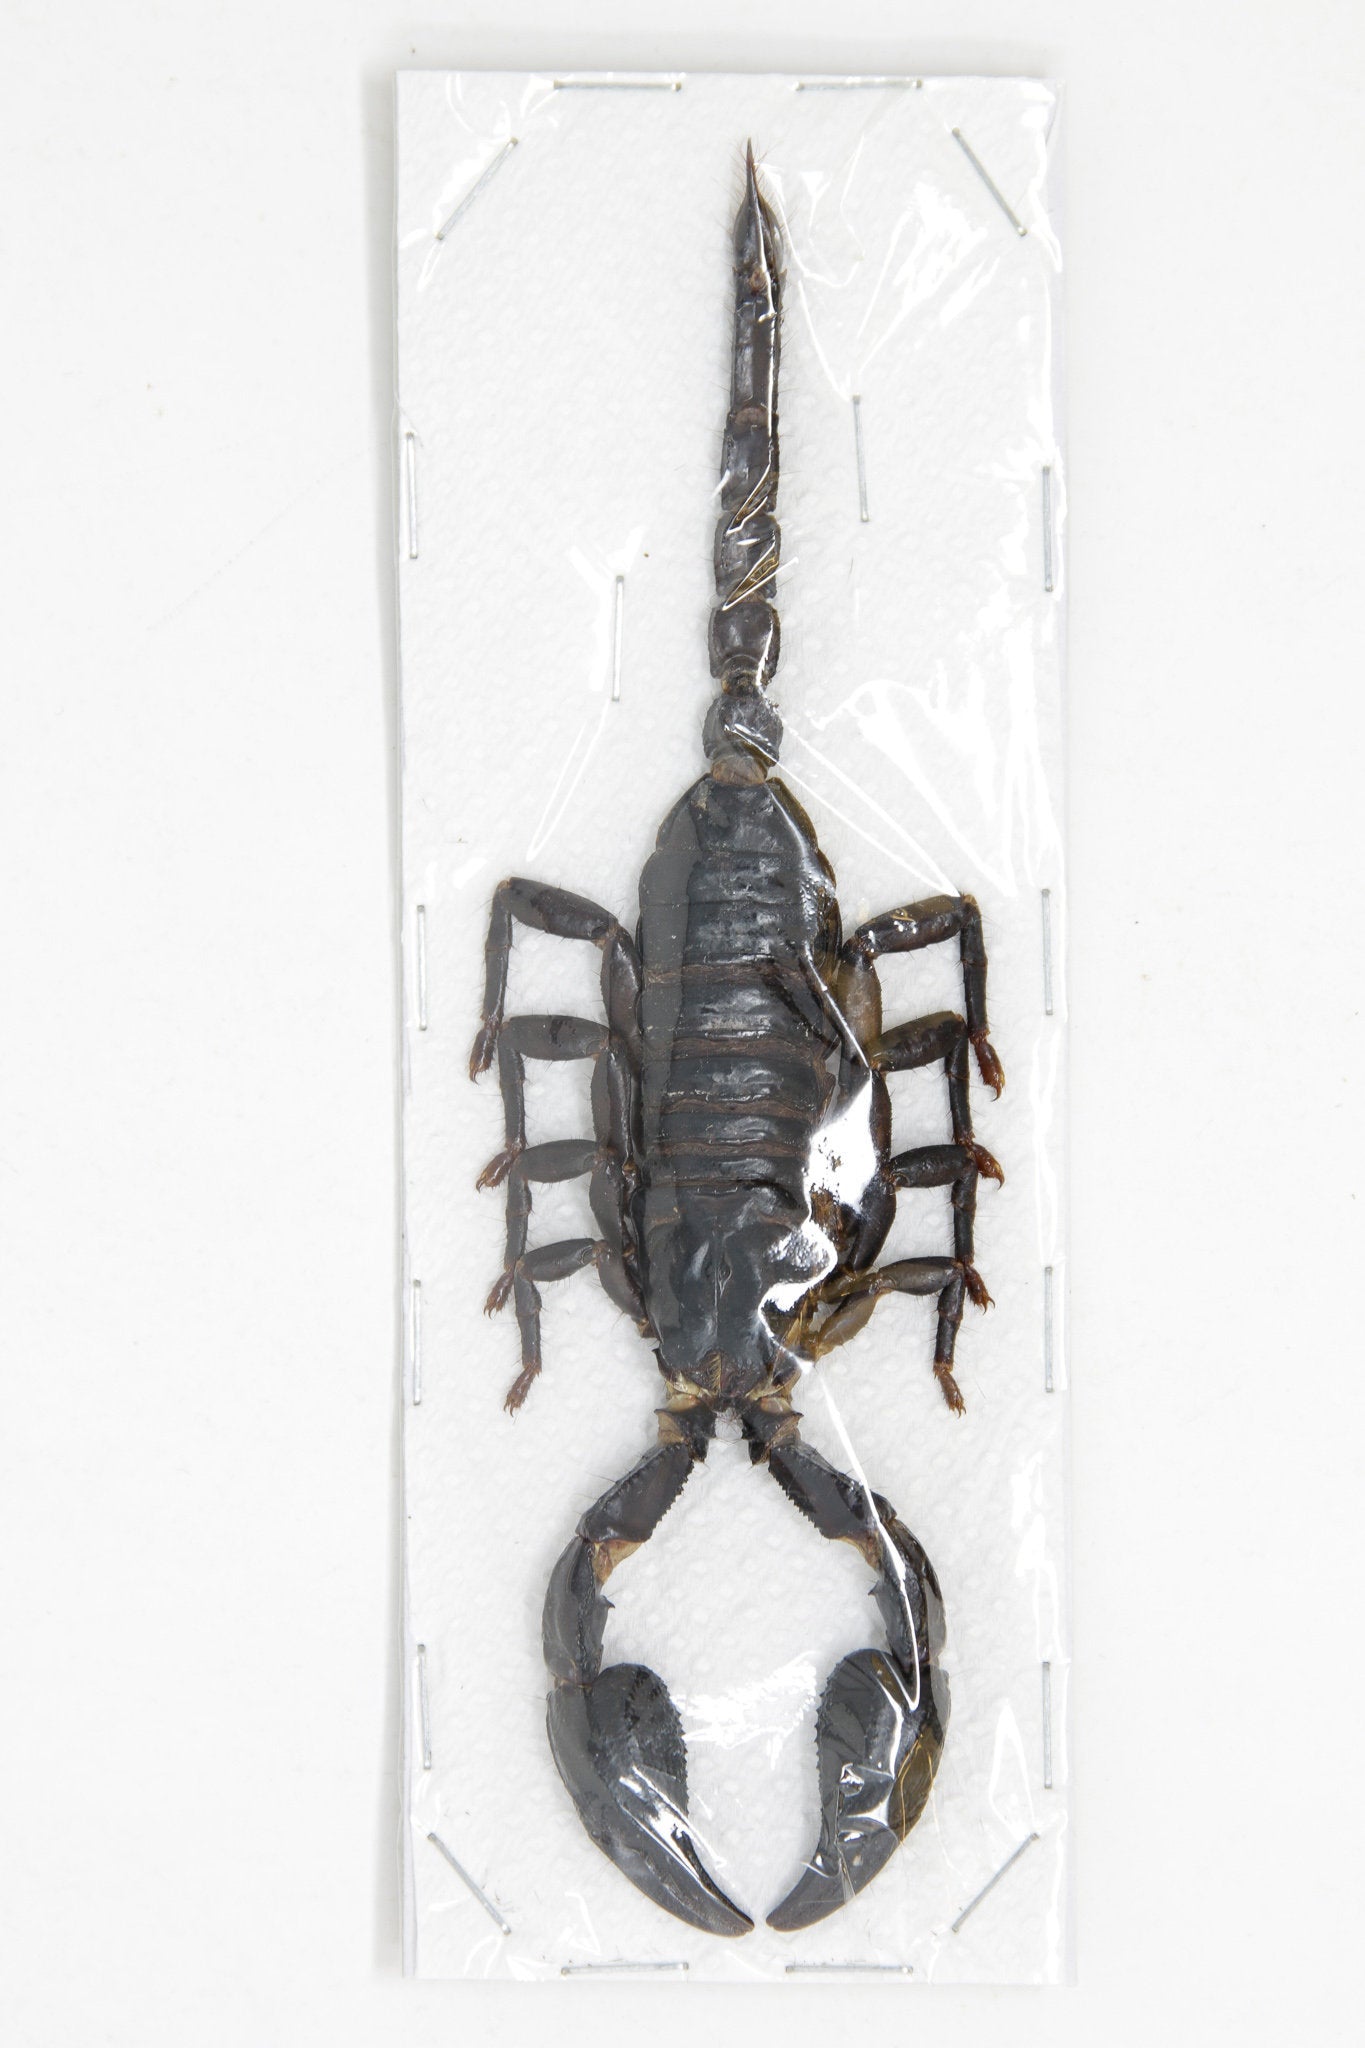 WHOLESALE 10 Giant Forest Scorpions, Heterometrus spinifer, +/- 120mm A1 Entomology Specimens A1